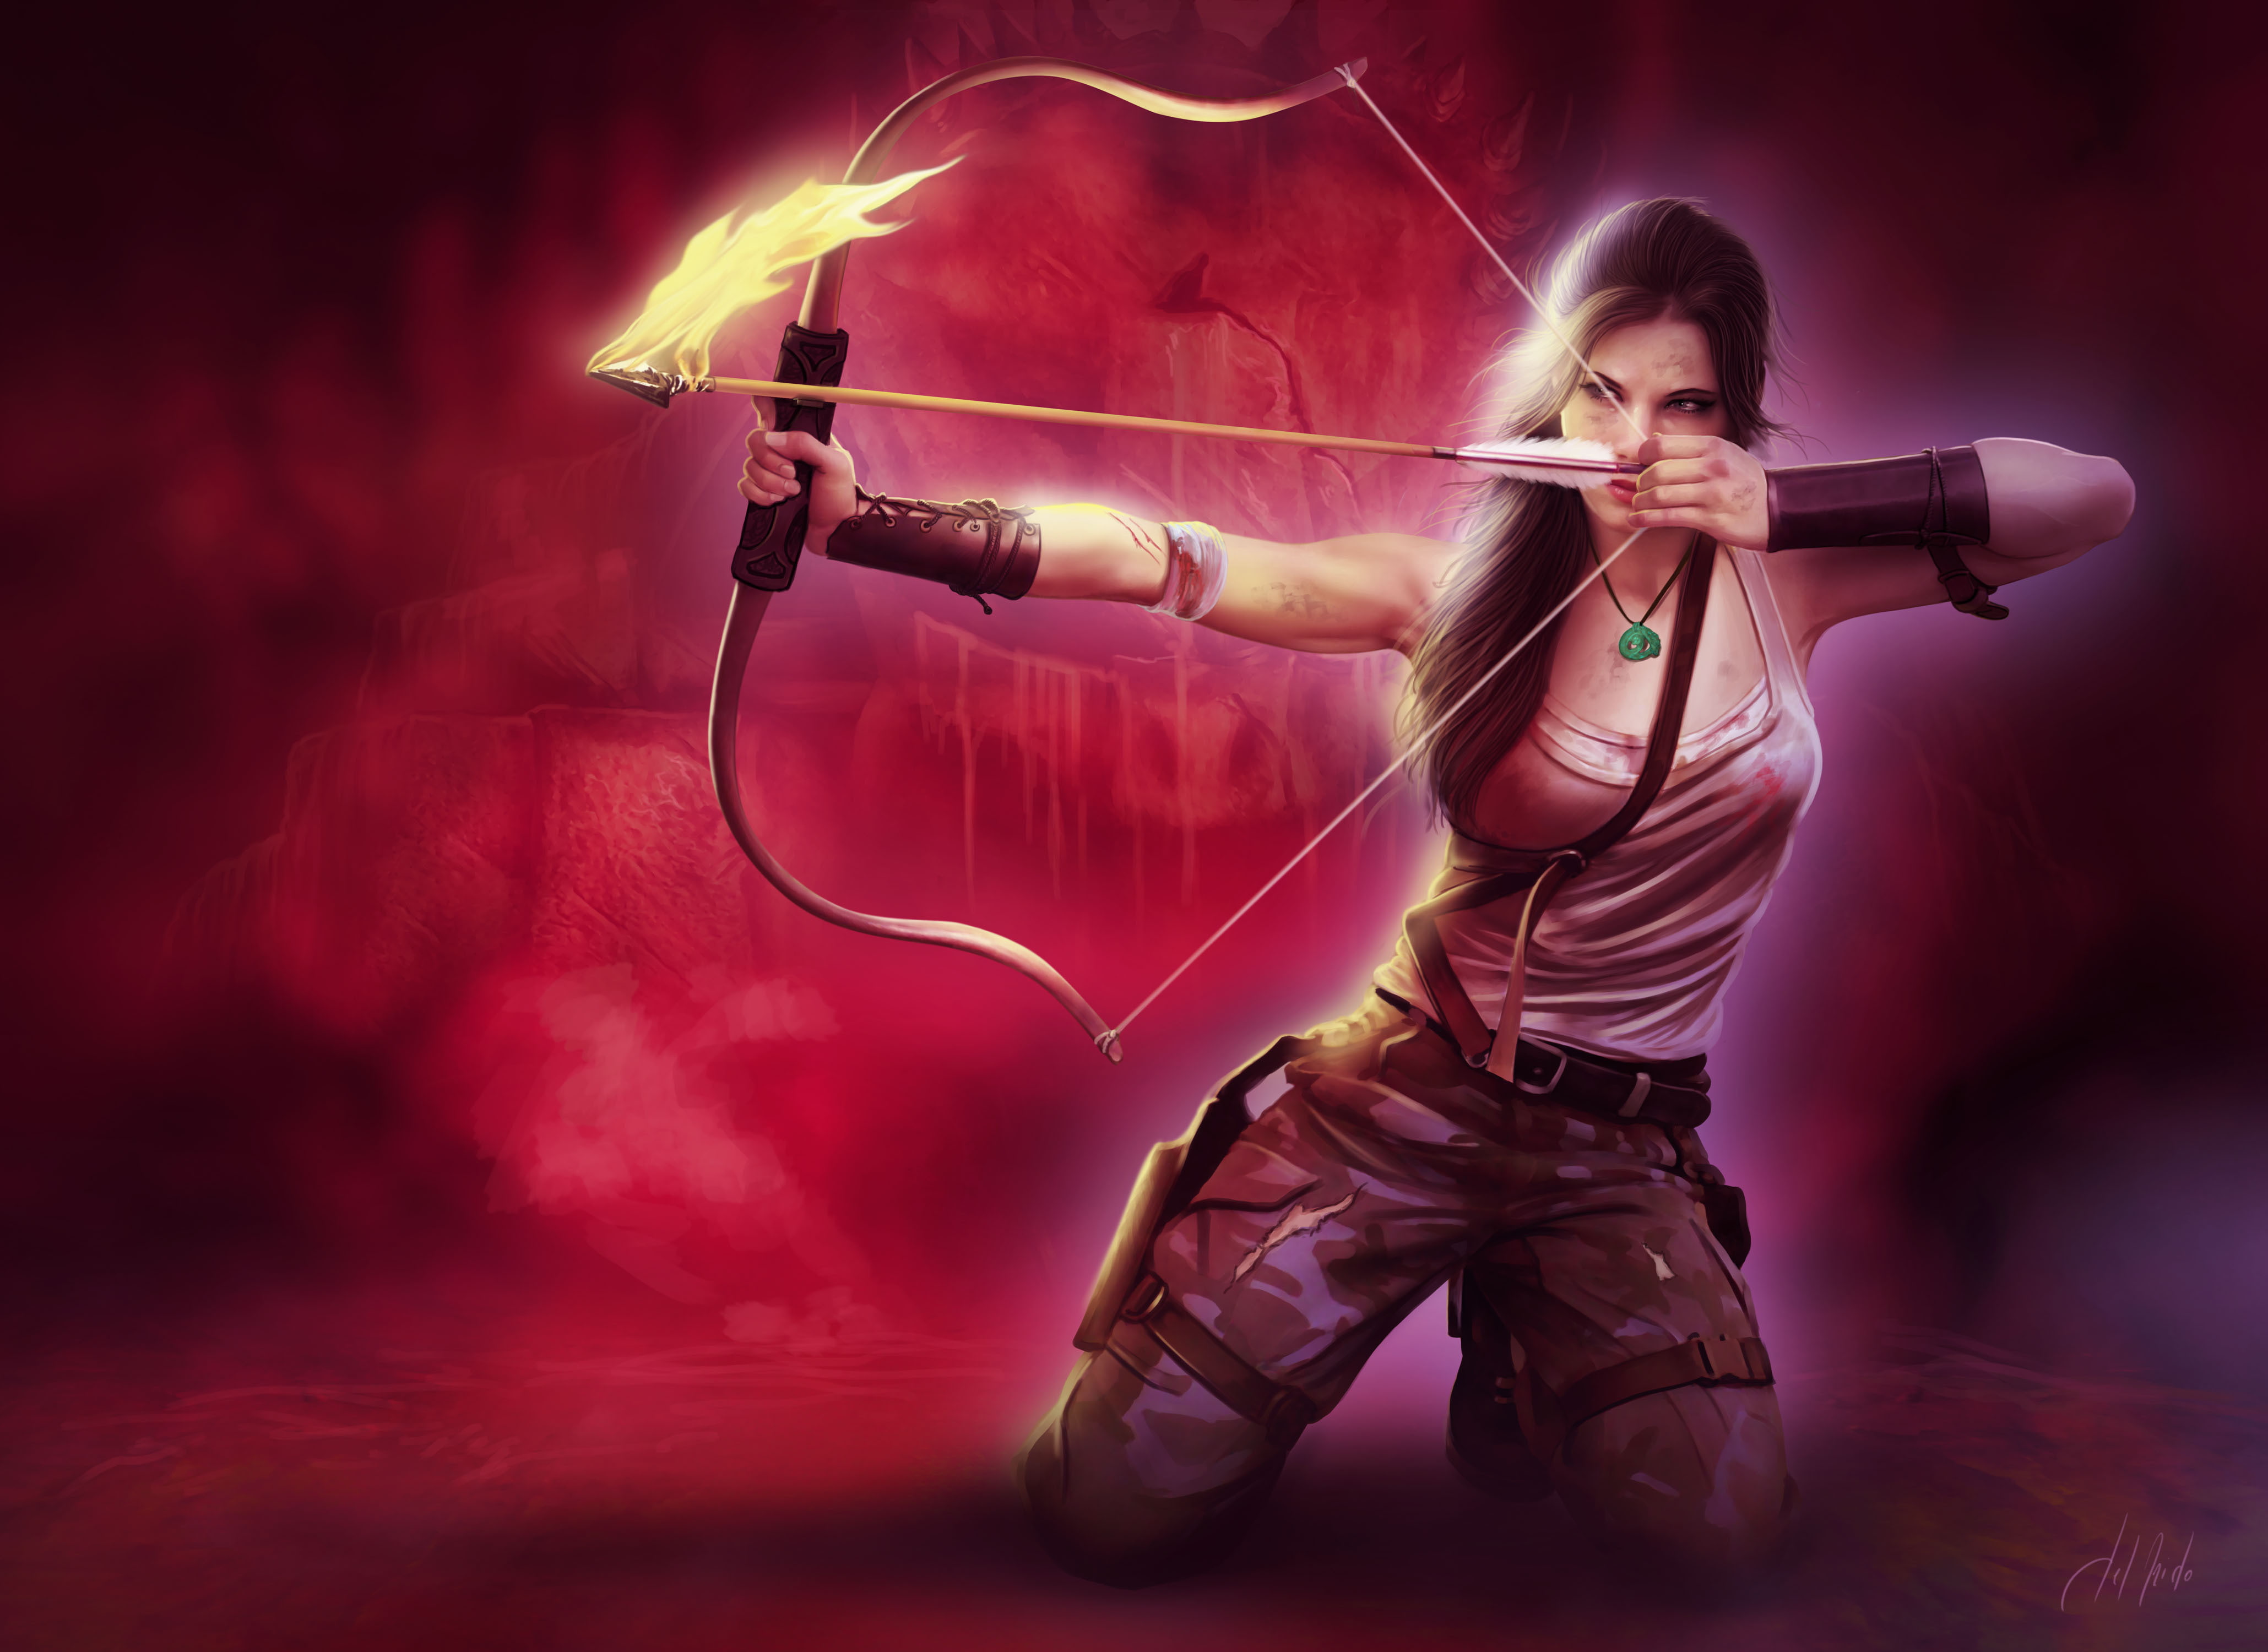 2013, archers, Croft, games, girls, Lara, raider, singlet, Tomb